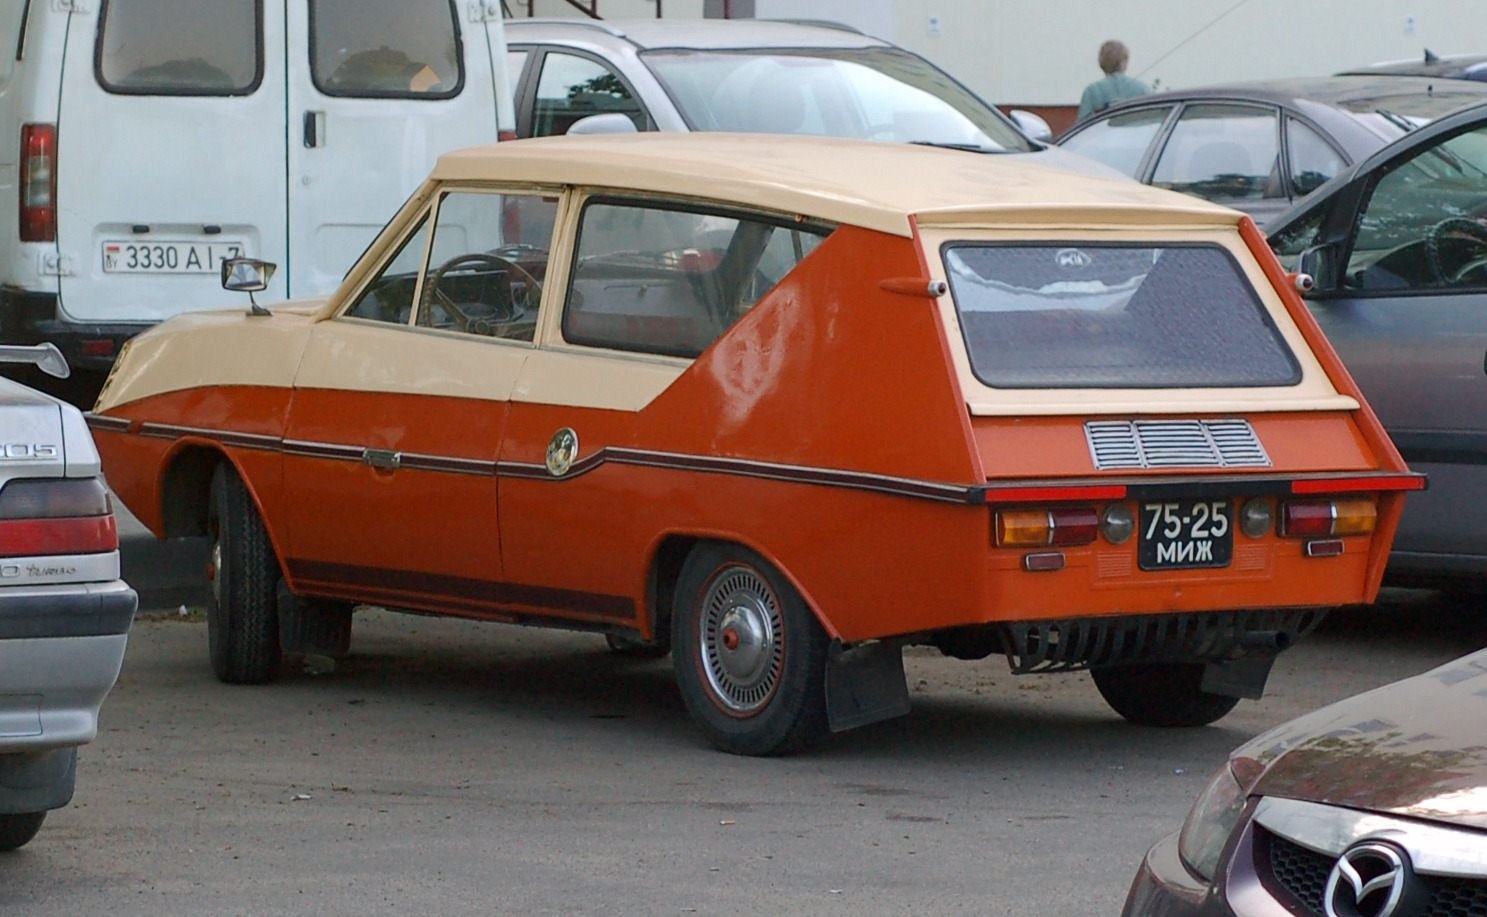 1973. ФАНТАЗИЯ. Белоруссия (СССР)